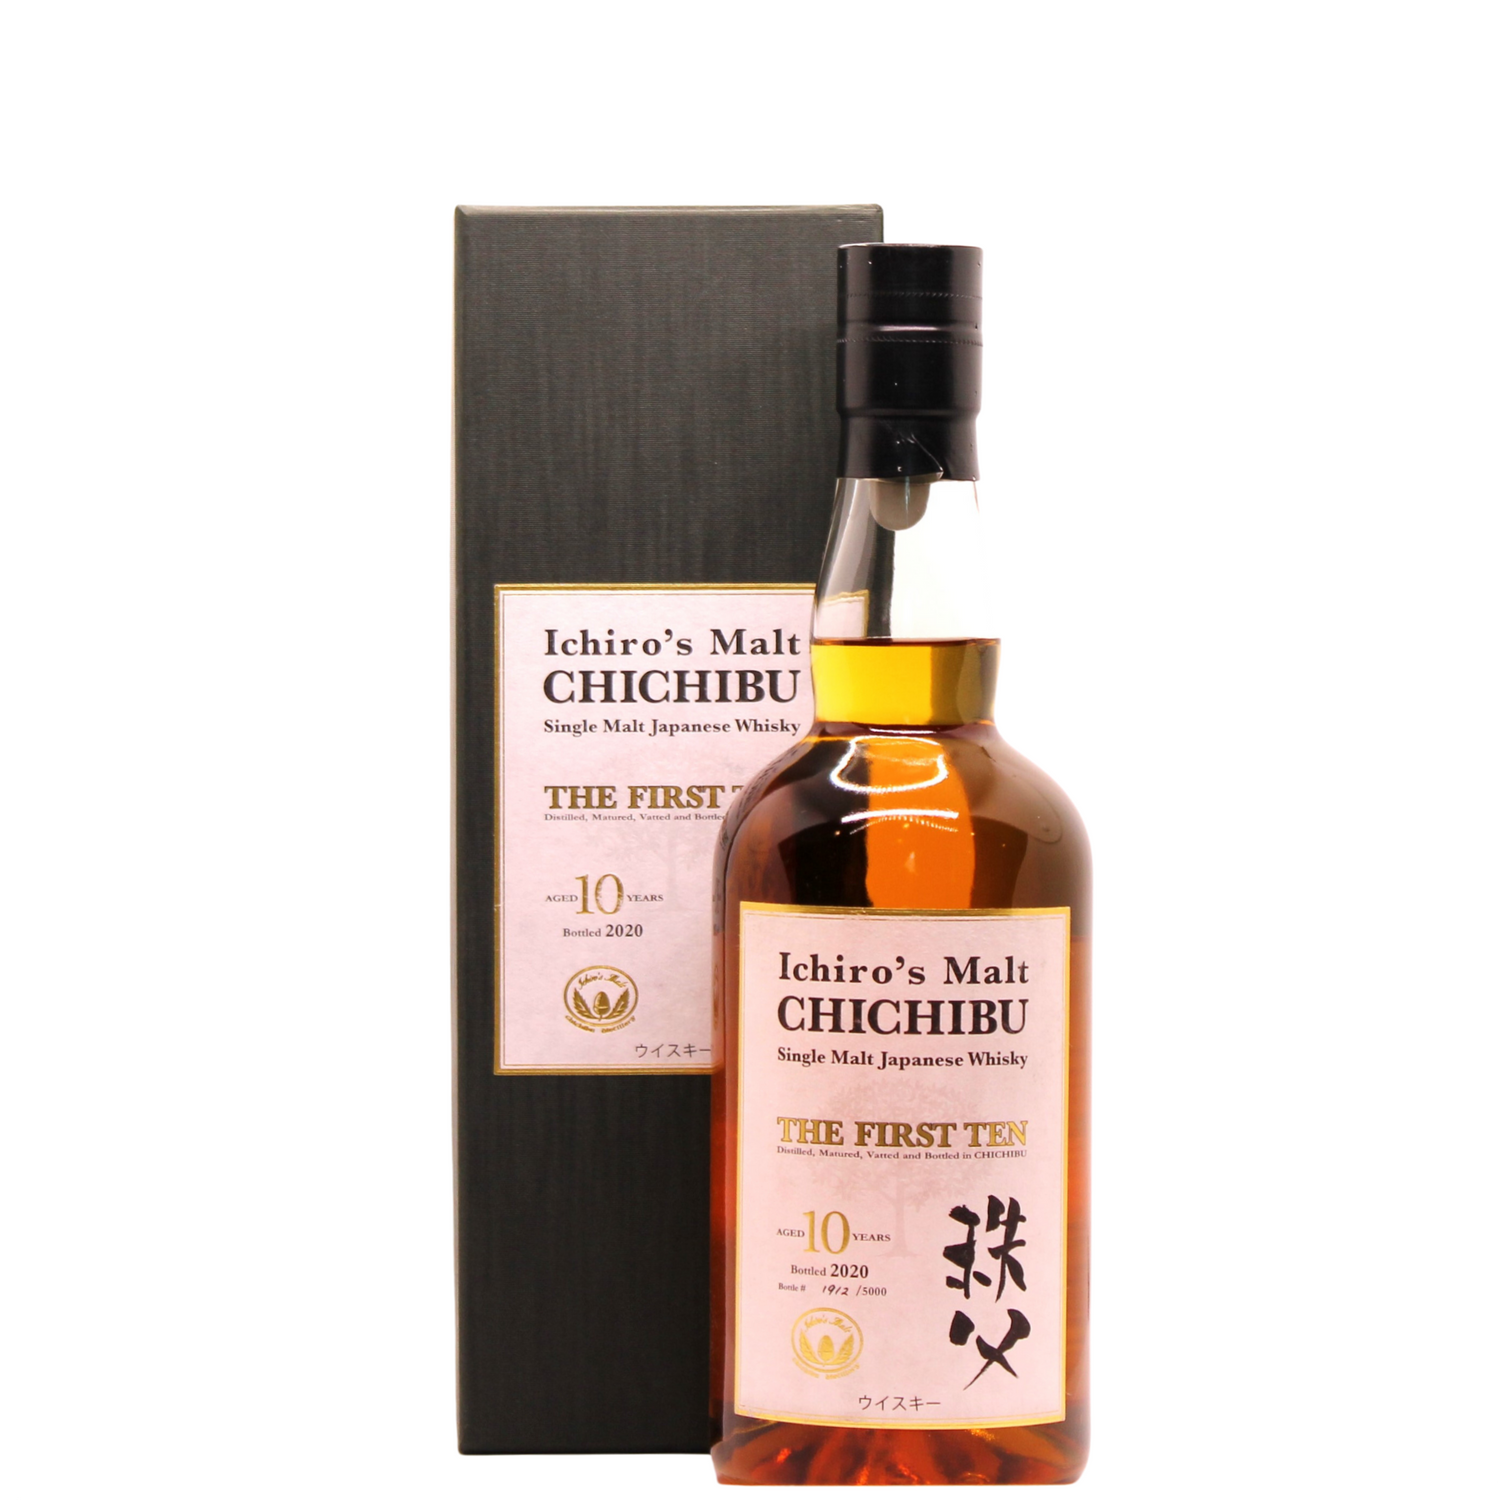 Ichiro's Malt Chichibu "The First TEN" 2020 Single Malt Japanese Whisky